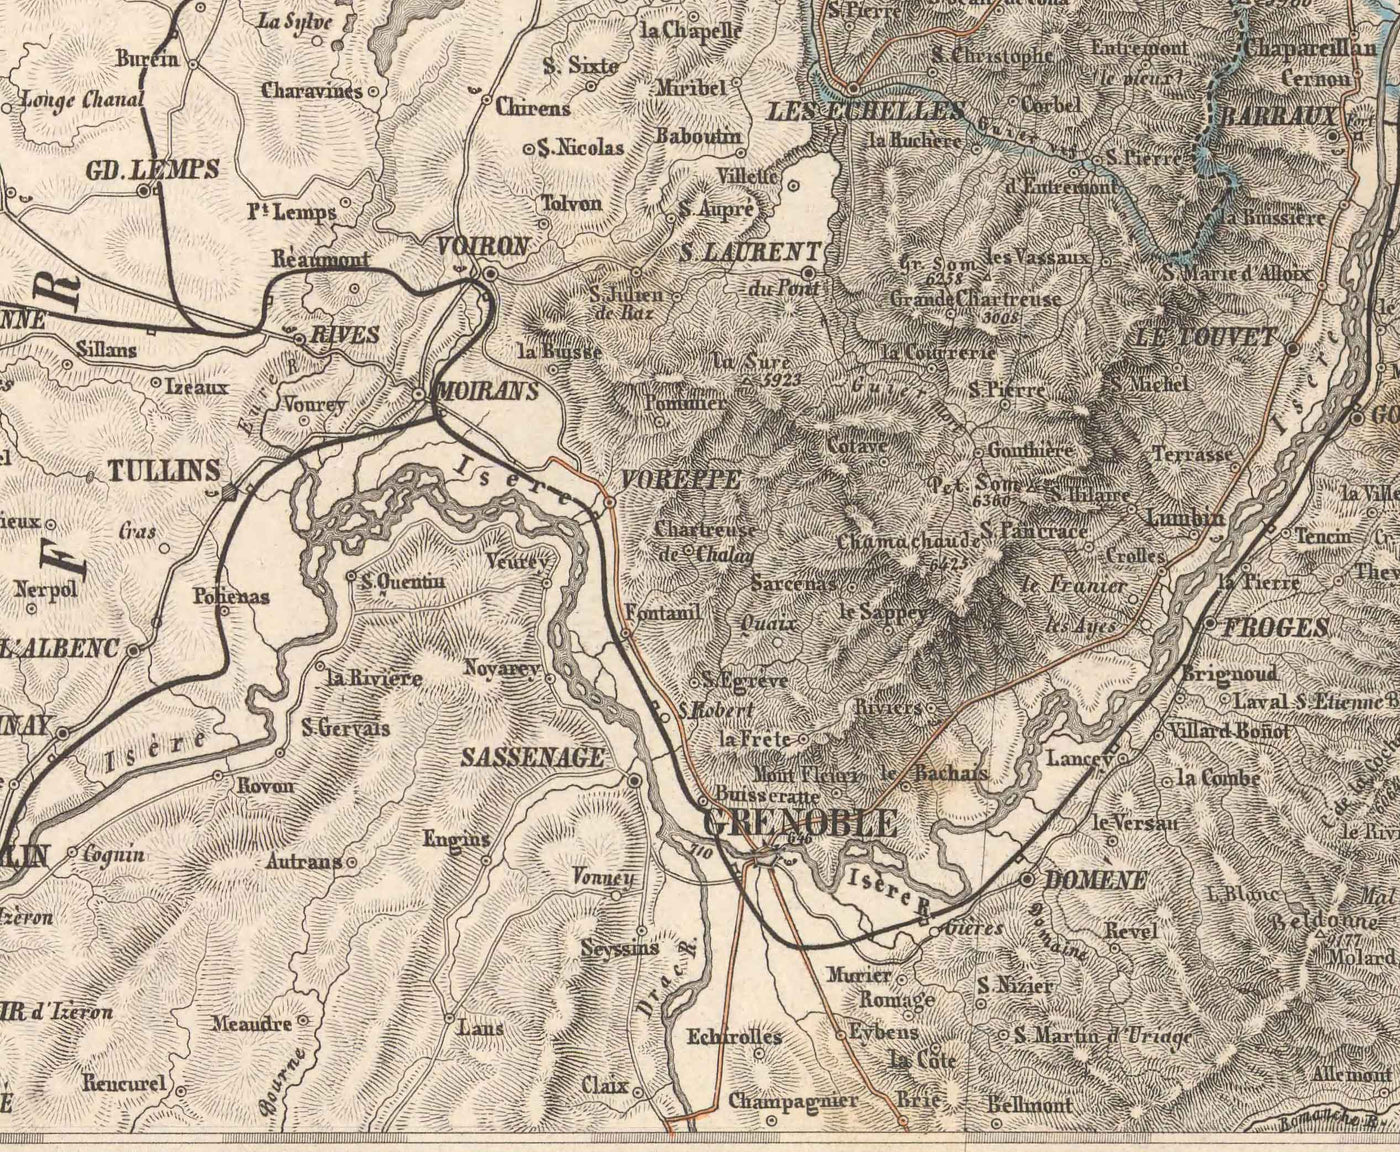 Old Map of the Alps in 1874 by Johann Mayr - Matterhorn, Mont Blanc, Geneva, Rhone, Lausanne, Grenoble, Sierre